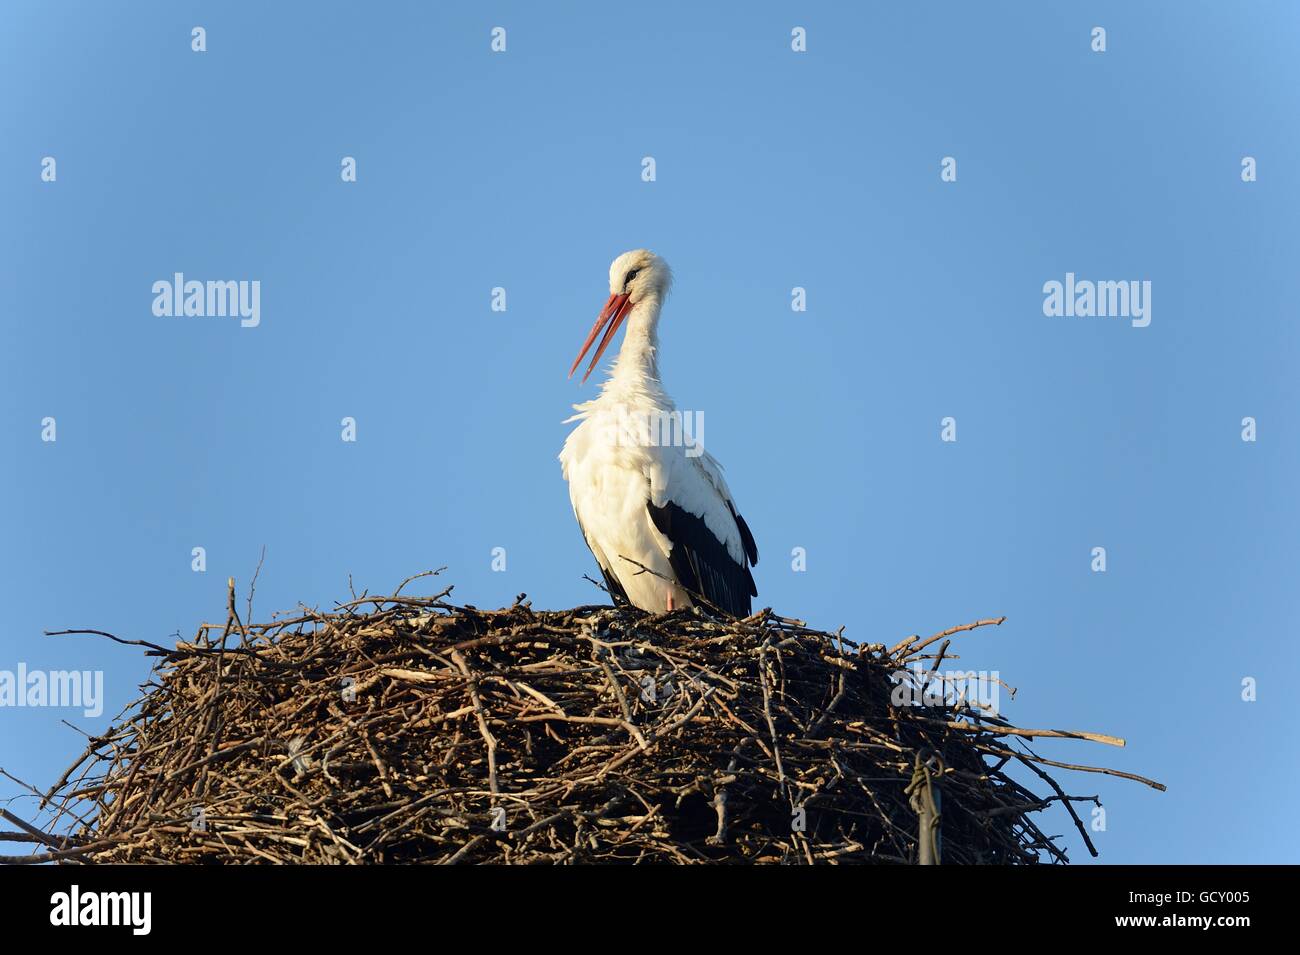 Stork, White Stork, Bird, Wading Bird, Beak, Nest, Germany, Animal, Feathers Stock Photo